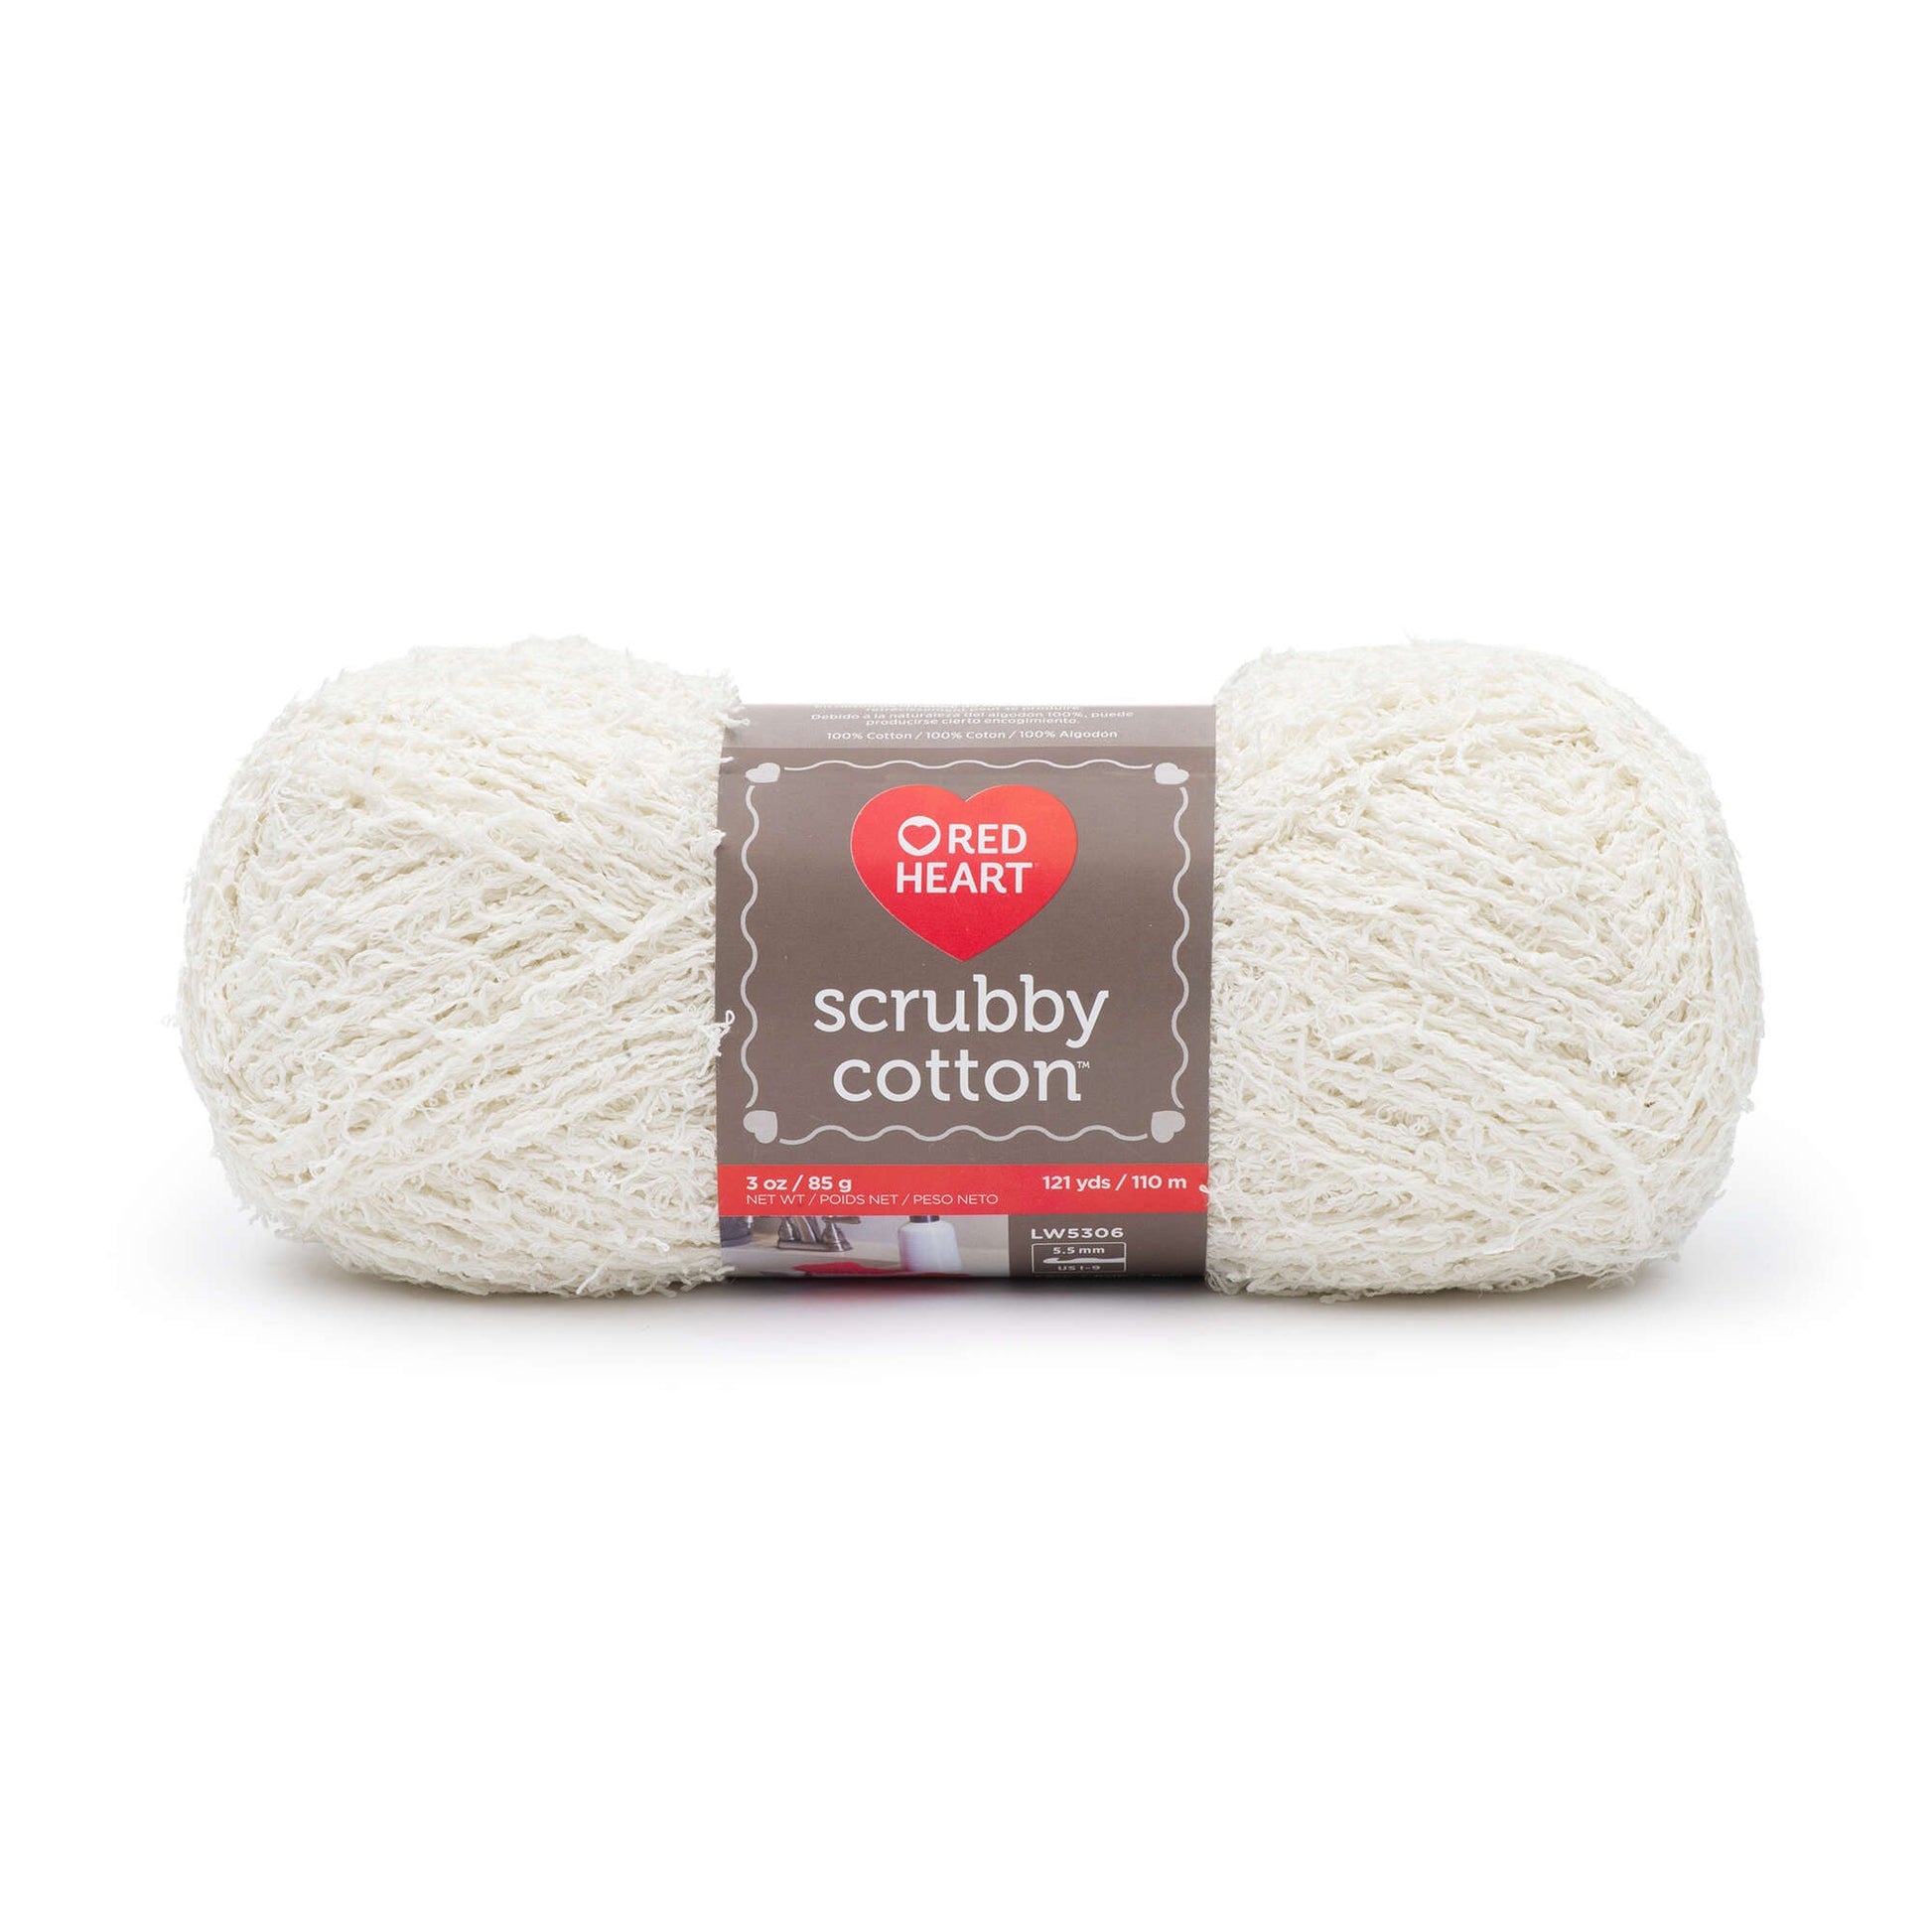 Red Heart Scrubby Cotton Yarn - Clearance shades Loofa